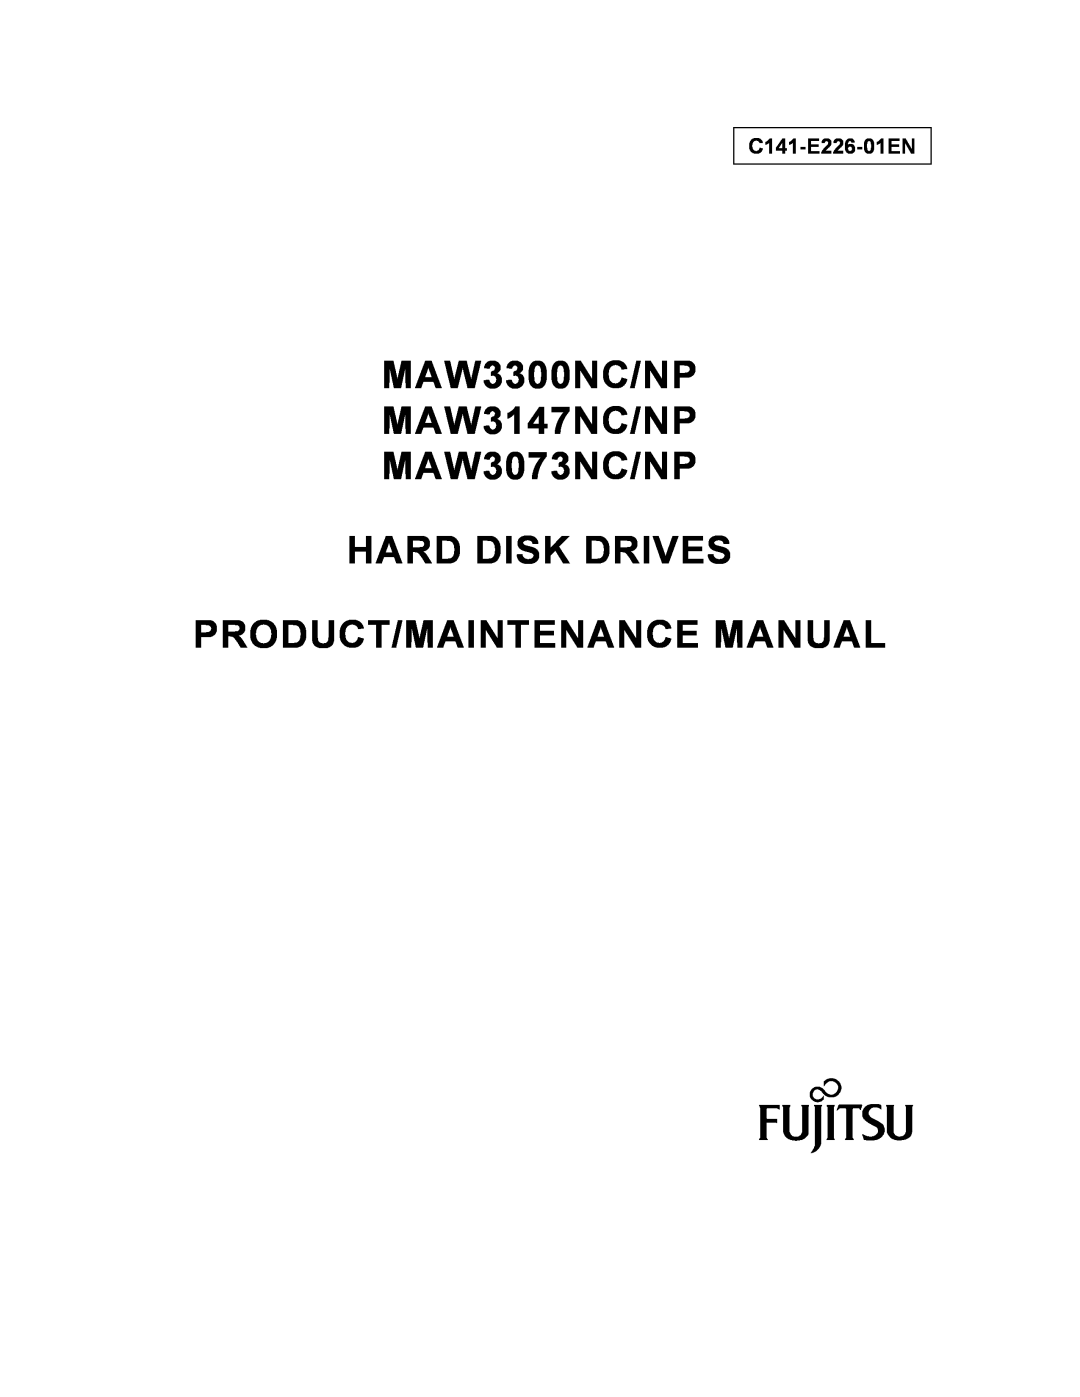 Fujitsu manual C141-E226-01EN, MAW3300NC/NP MAW3147NC/NP MAW3073NC/NP HARD DISK DRIVES, Product/Maintenance Manual 